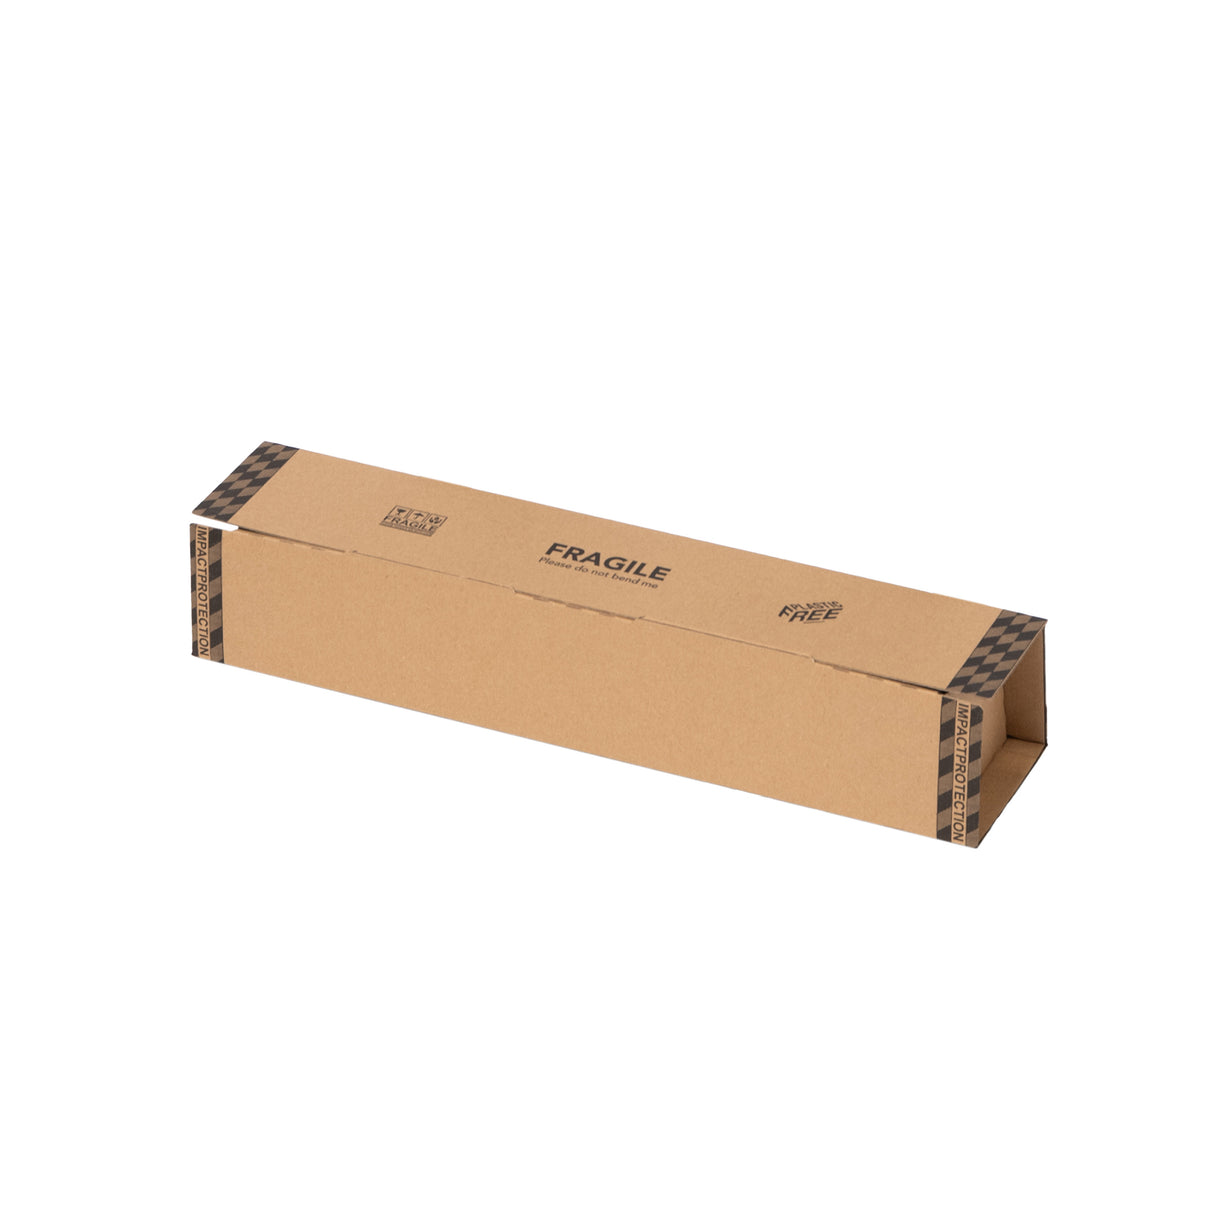 A2 Tube Cardboard Postal Box Plastic Free